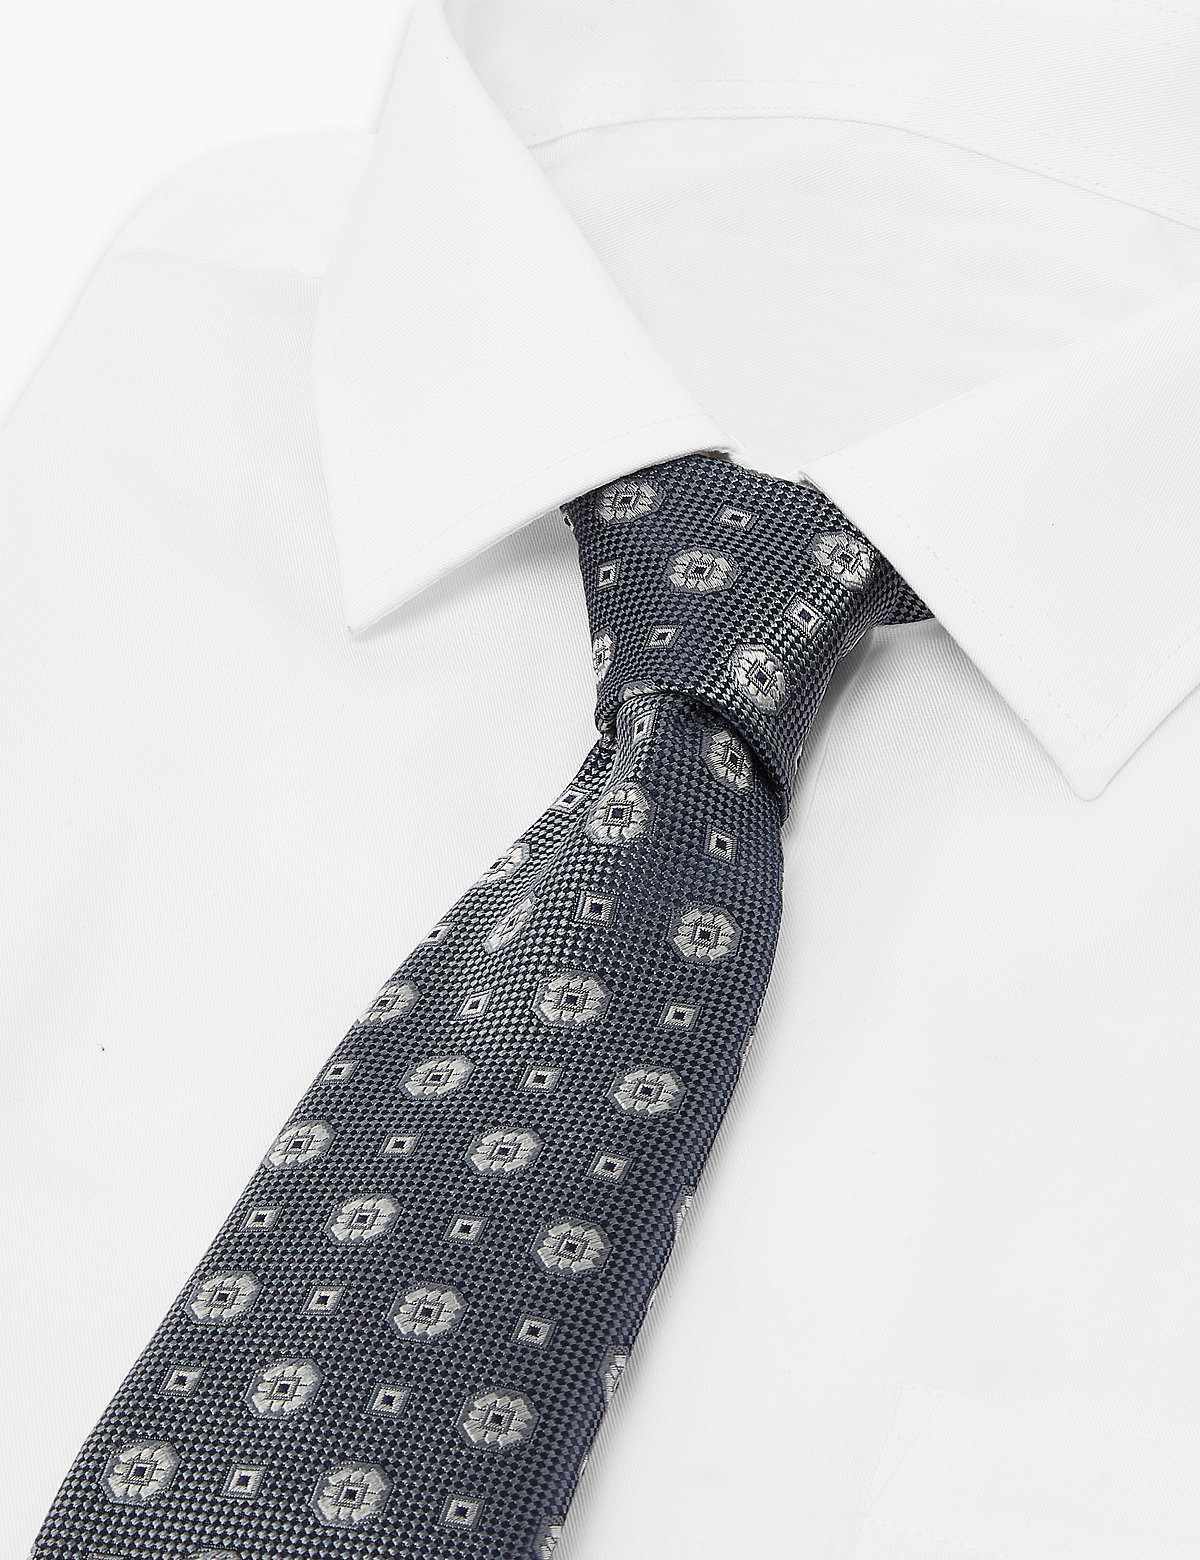 Luxury Foulard Tie